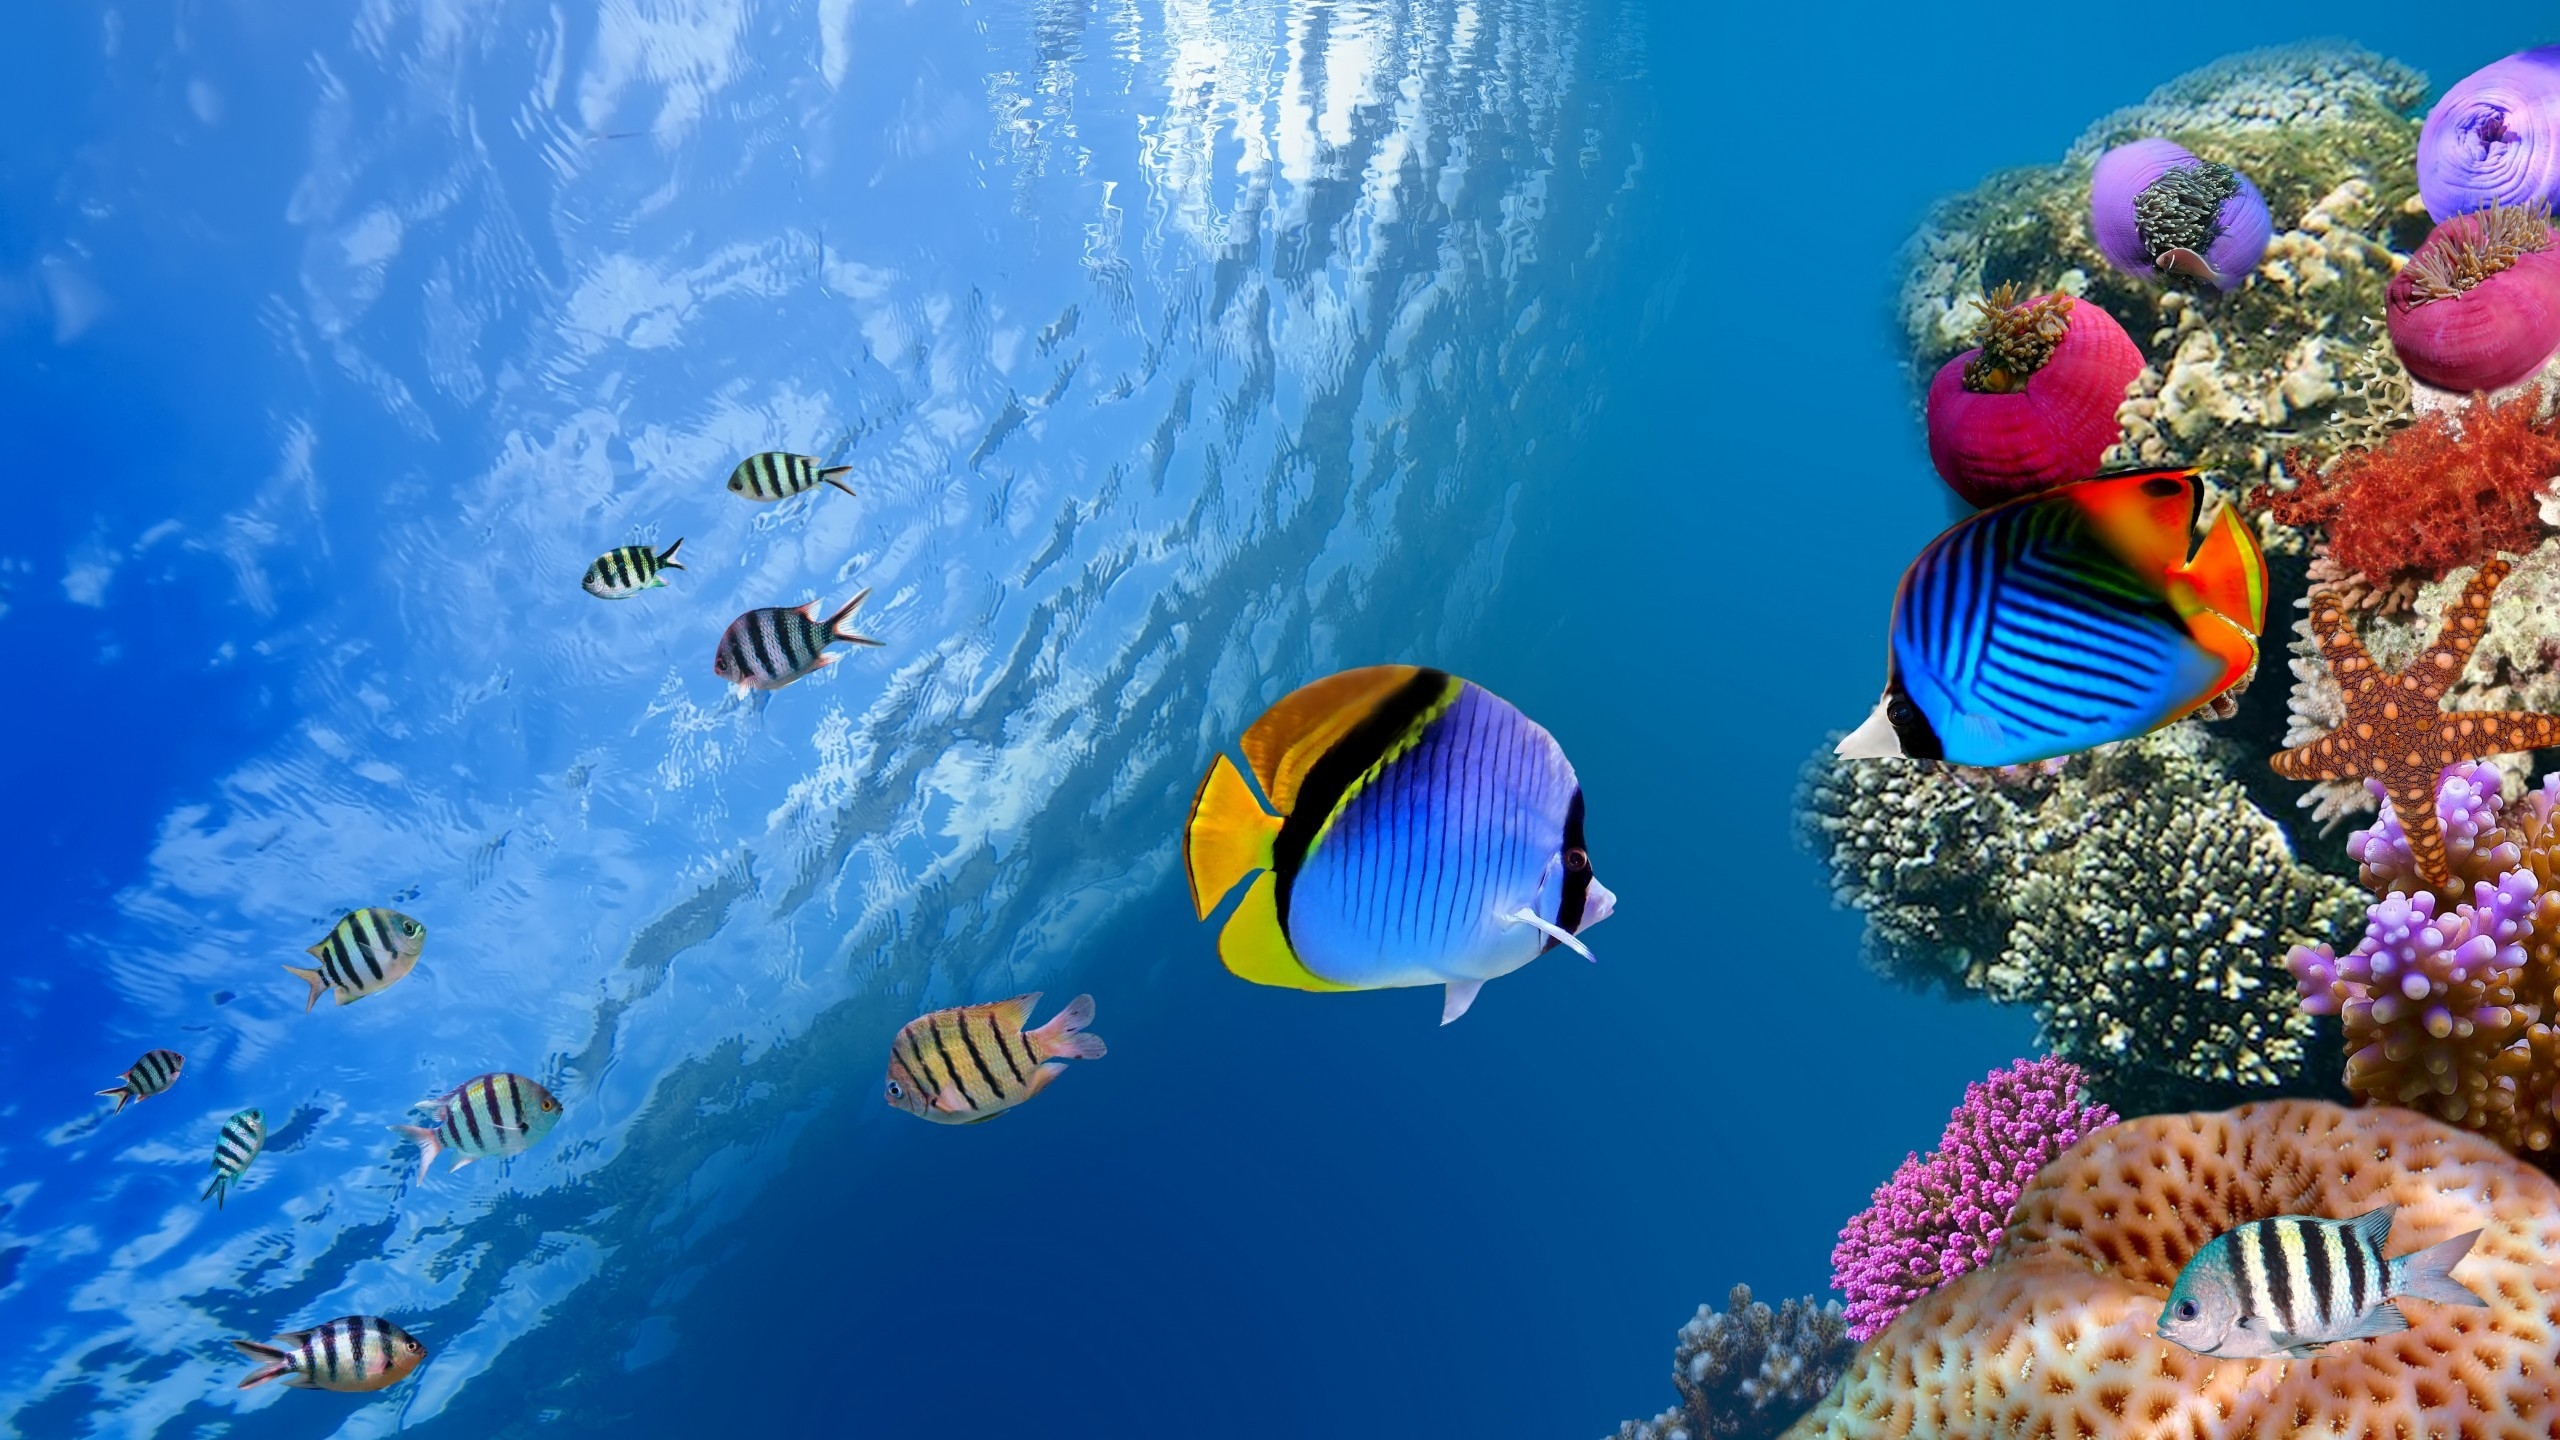 Underwater Coral Scene for 2560x1440 HDTV resolution